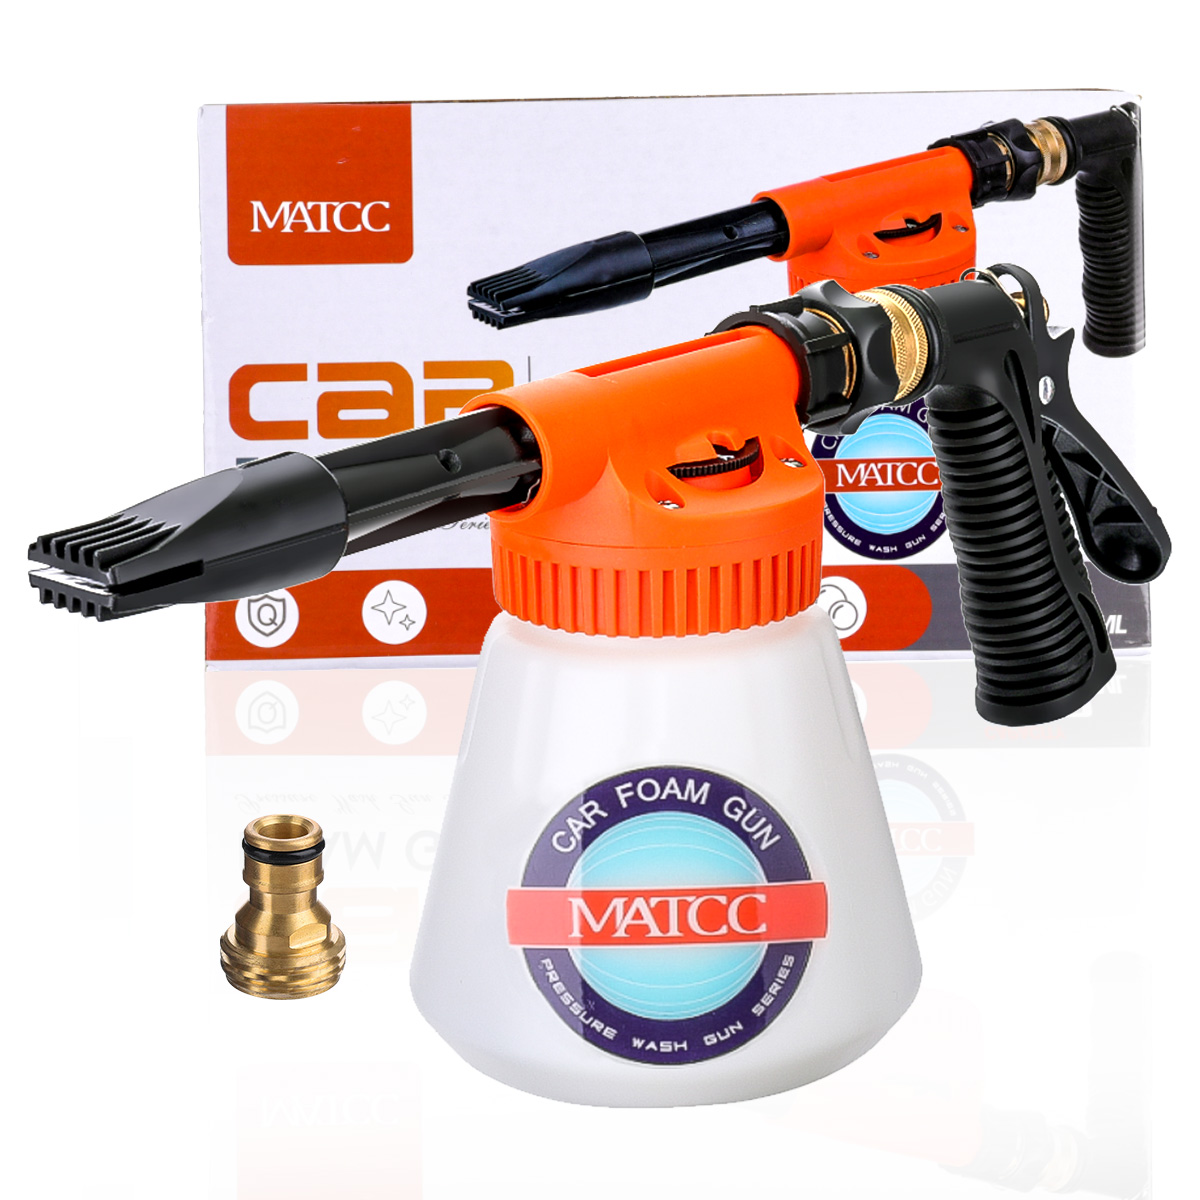 MATCC-Car-Foam-Gun-Foam-and-Adjustable-Car-Wash-Sprayer-with-Adjustment-Ratio-Dial-Foam-Sprayer-Fit--1388324-10